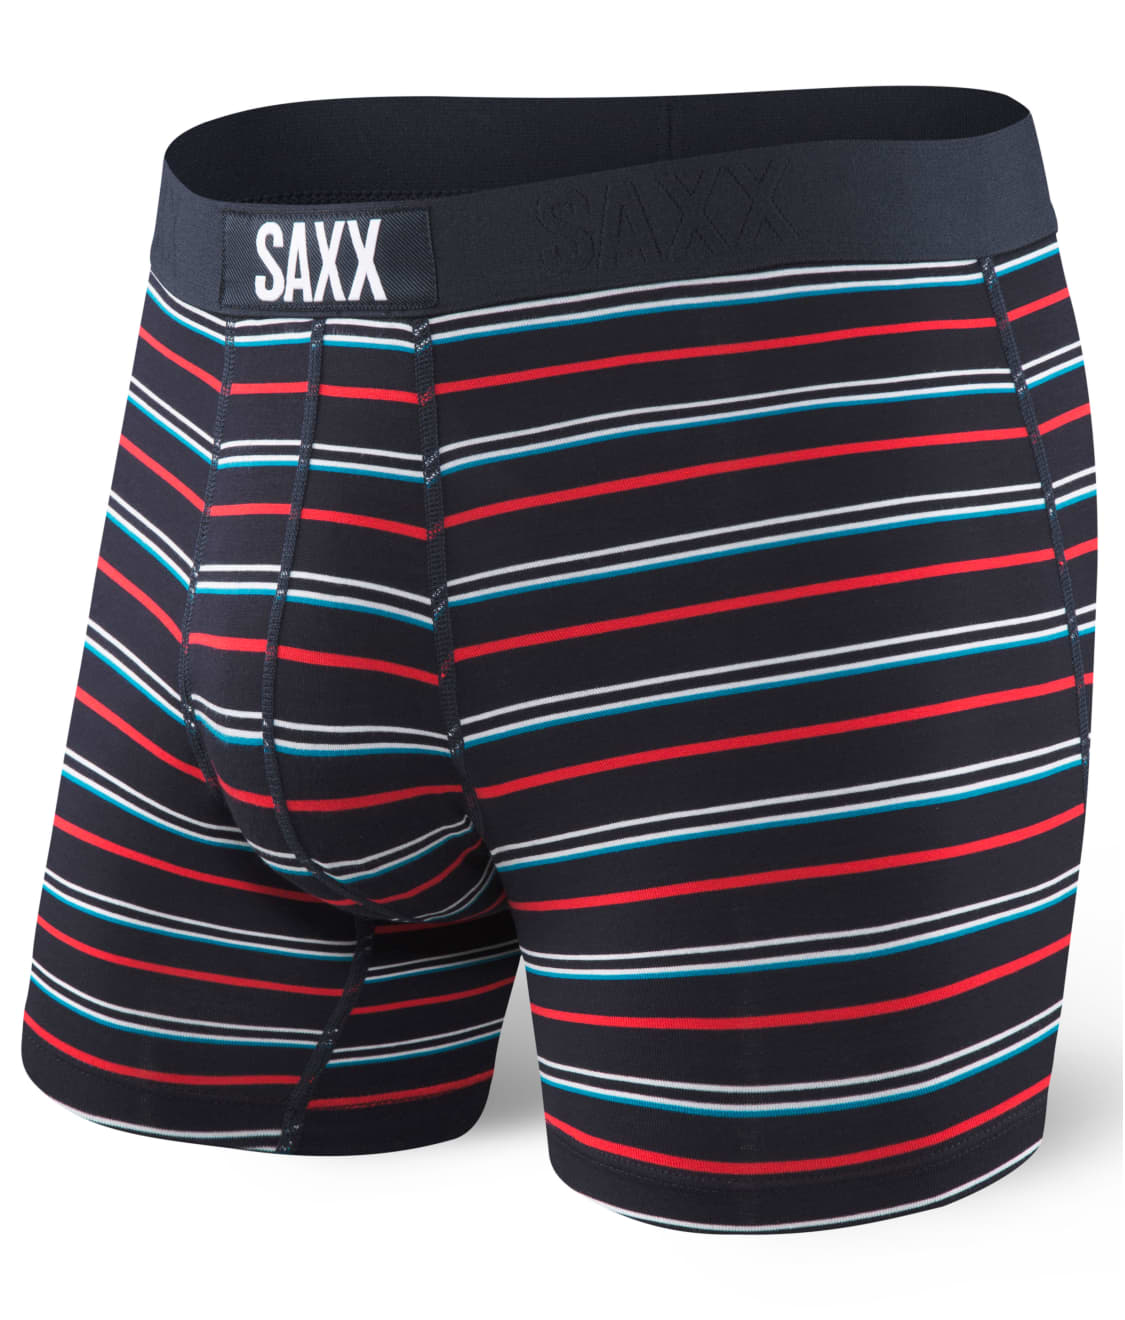 SAXX Vibe Boxer Brief & Reviews | Bare Necessities (Style SXBM35)